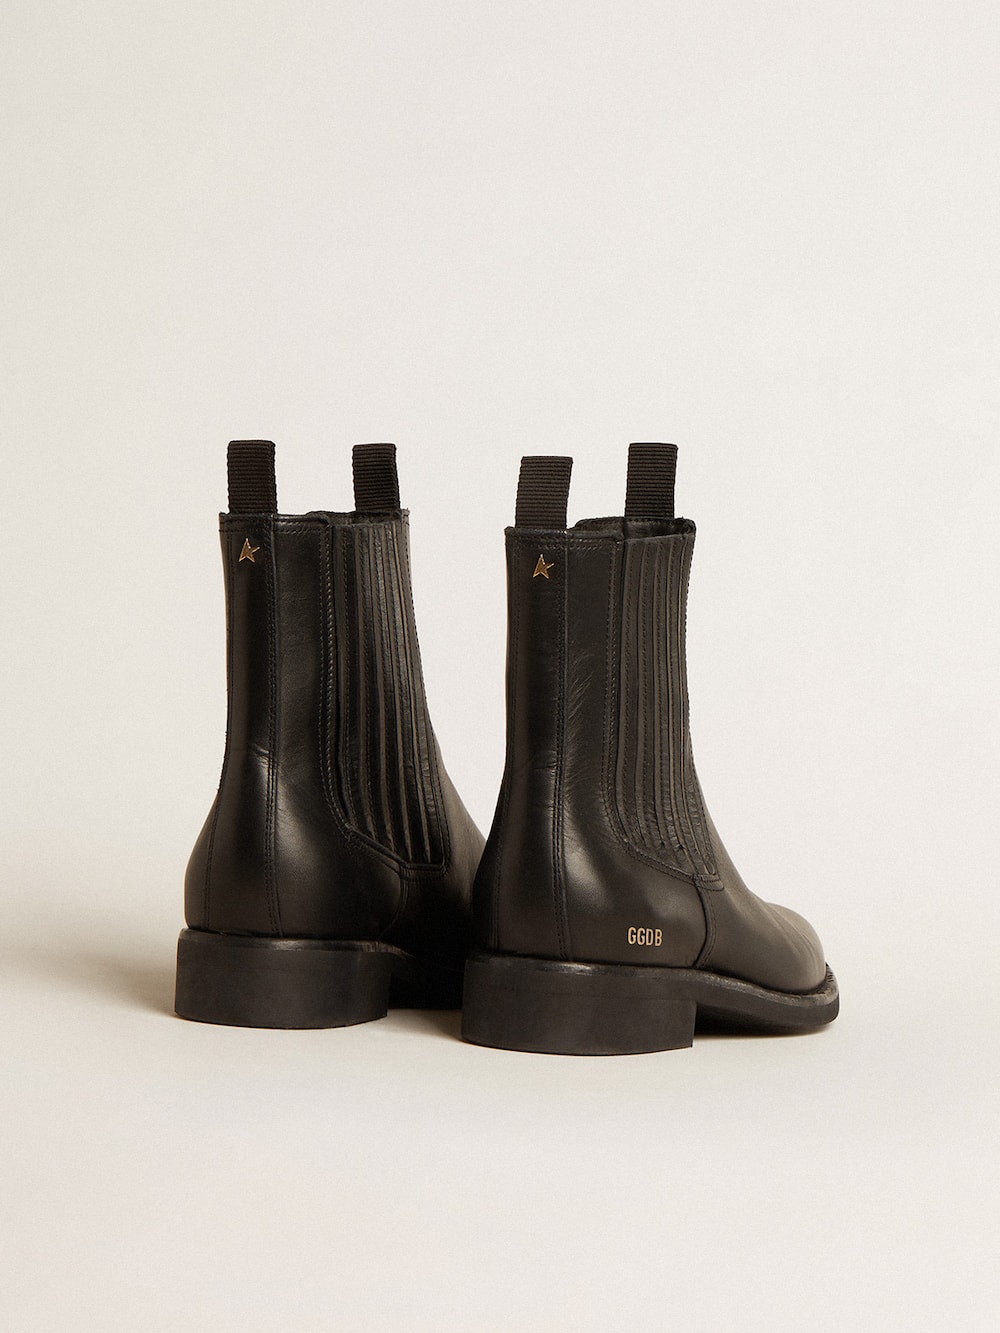 Golden Goose - Men’s Chelsea boots in black leather in 